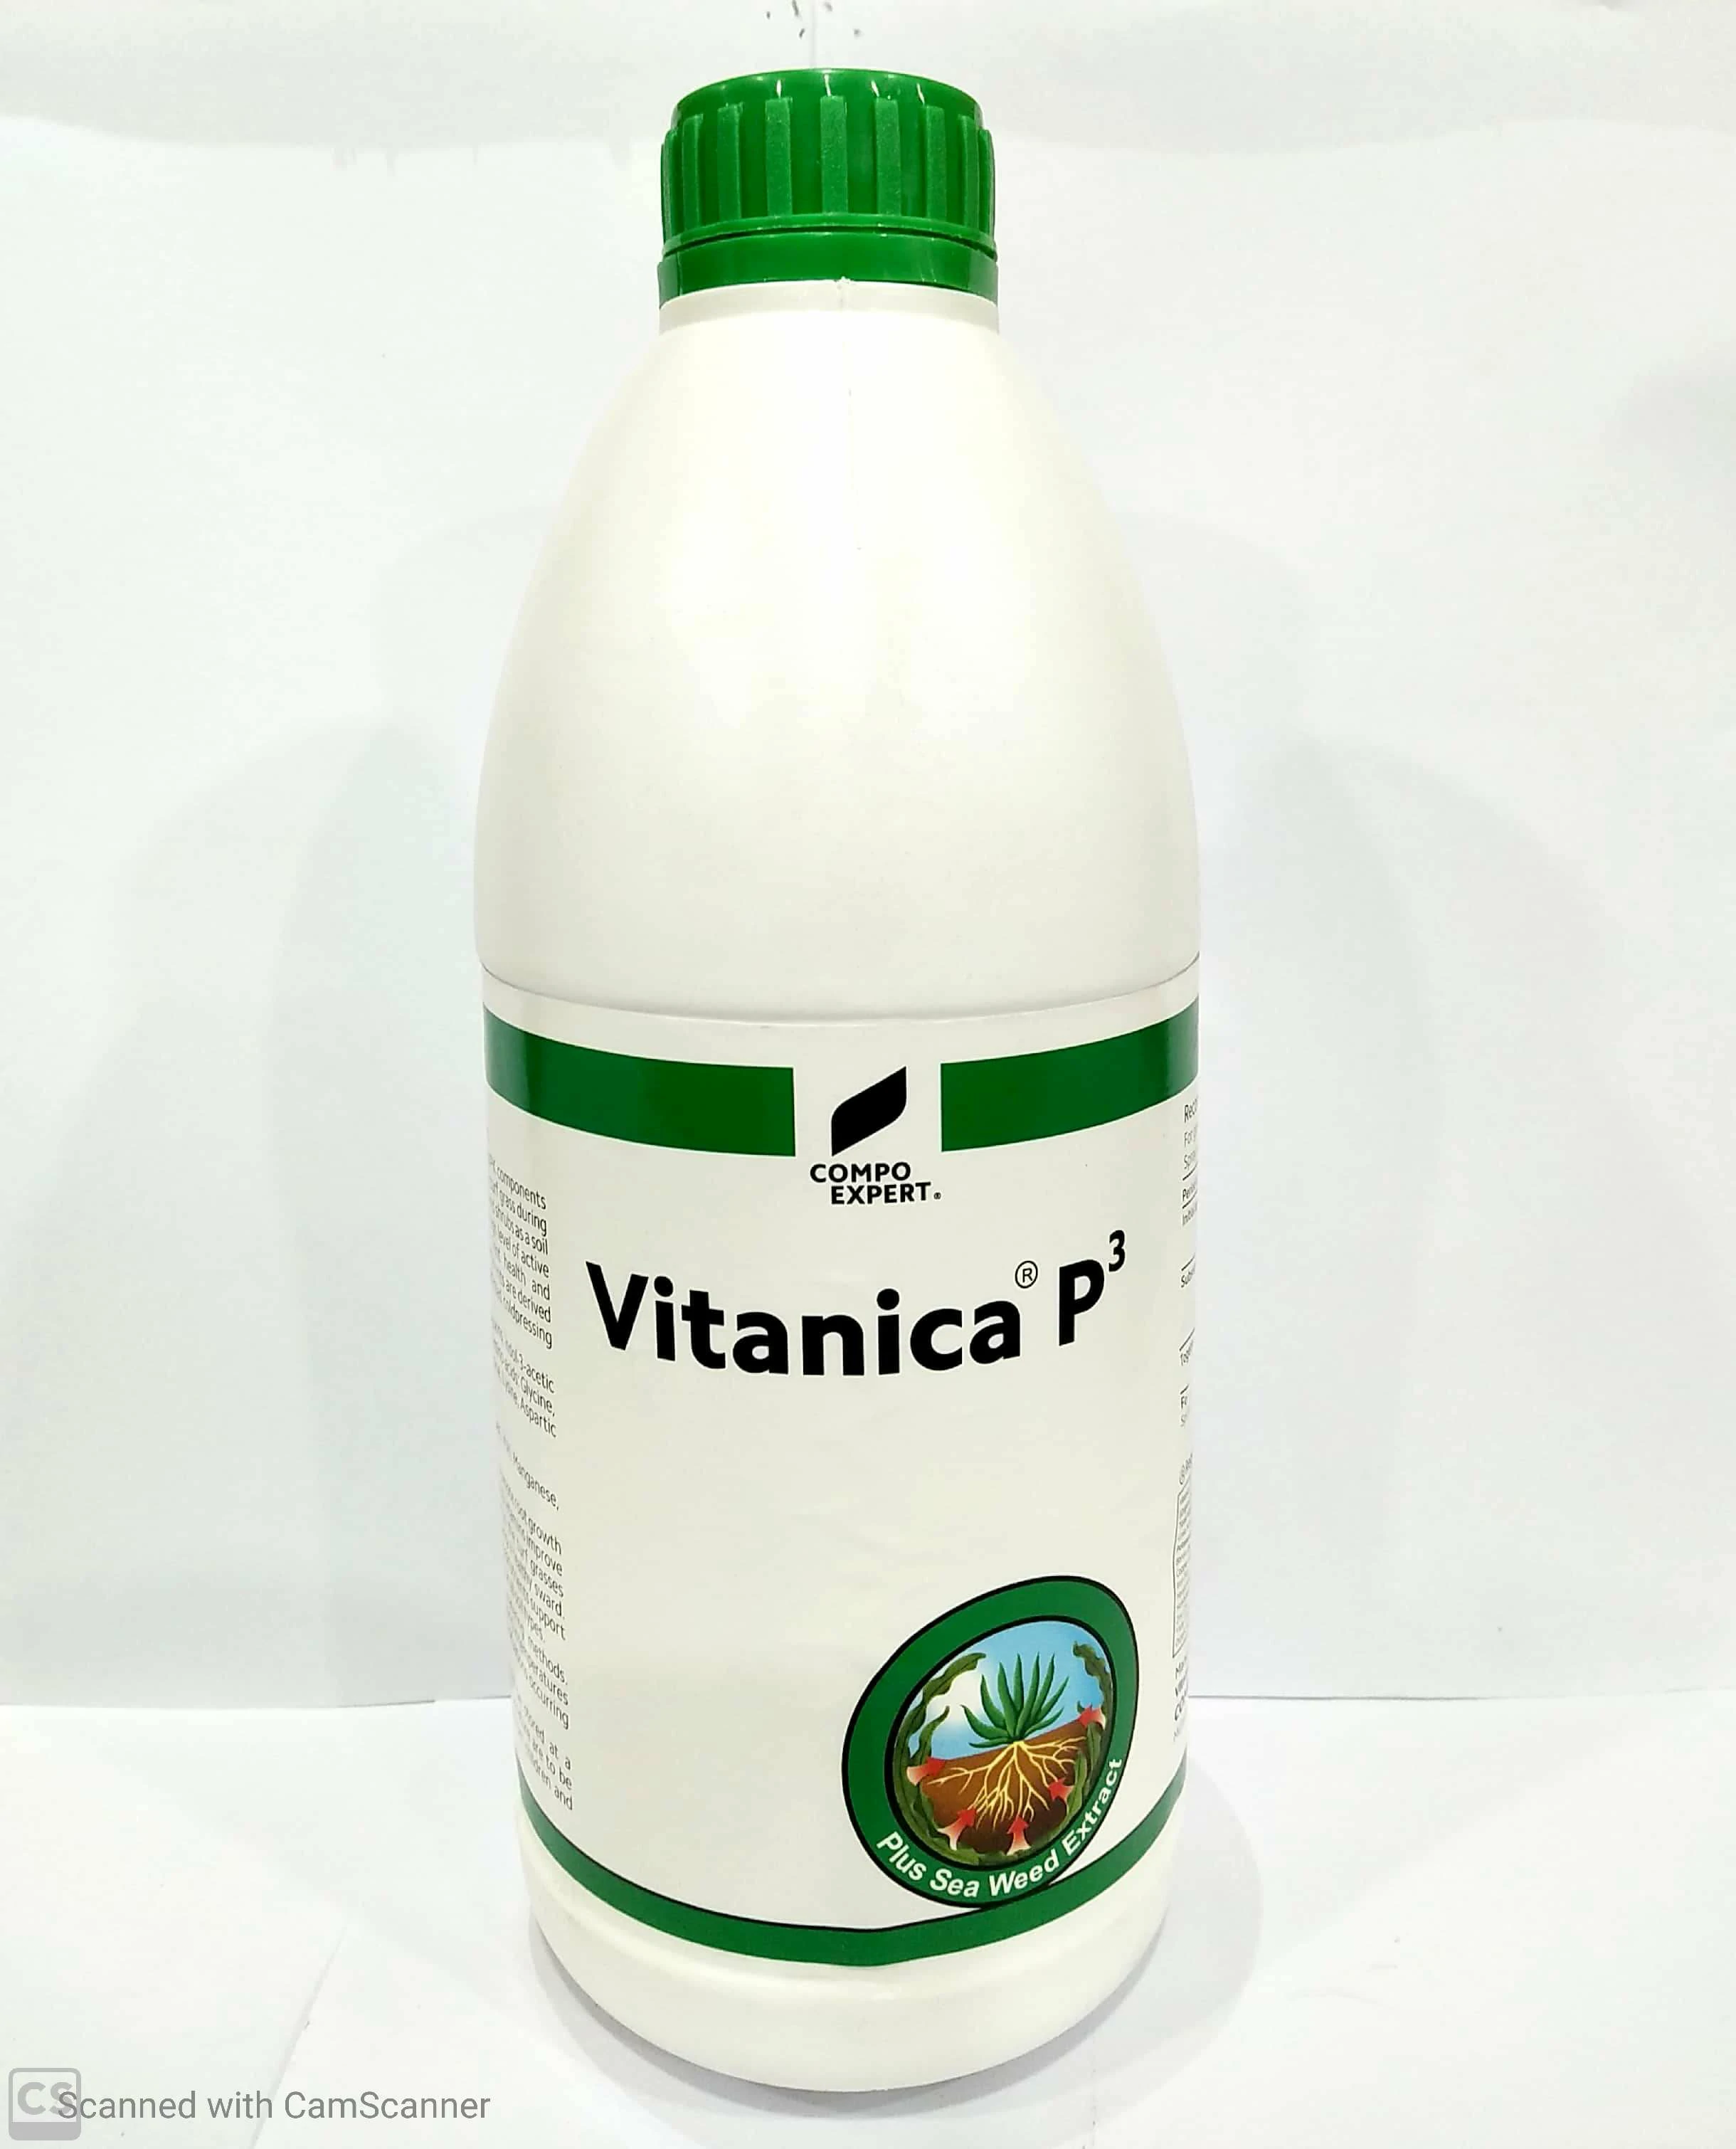 Vitanica P3 Compo Expert